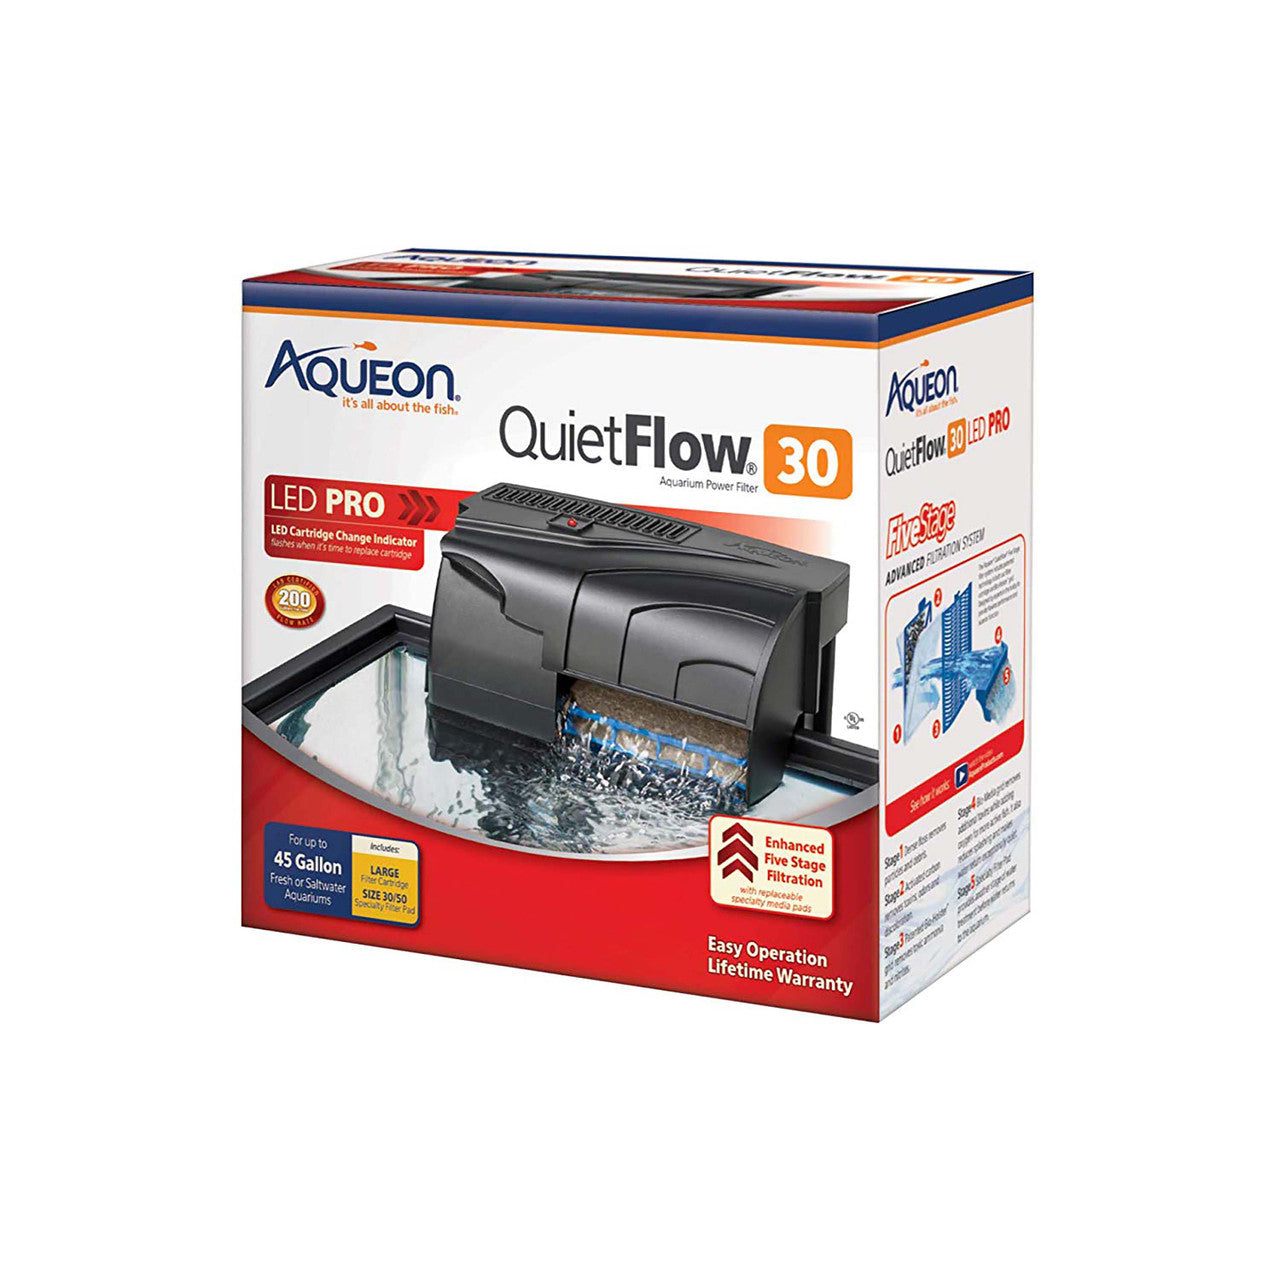 Aqueon QuietFlow LED PRO Aquarium Power Filter, Size 30